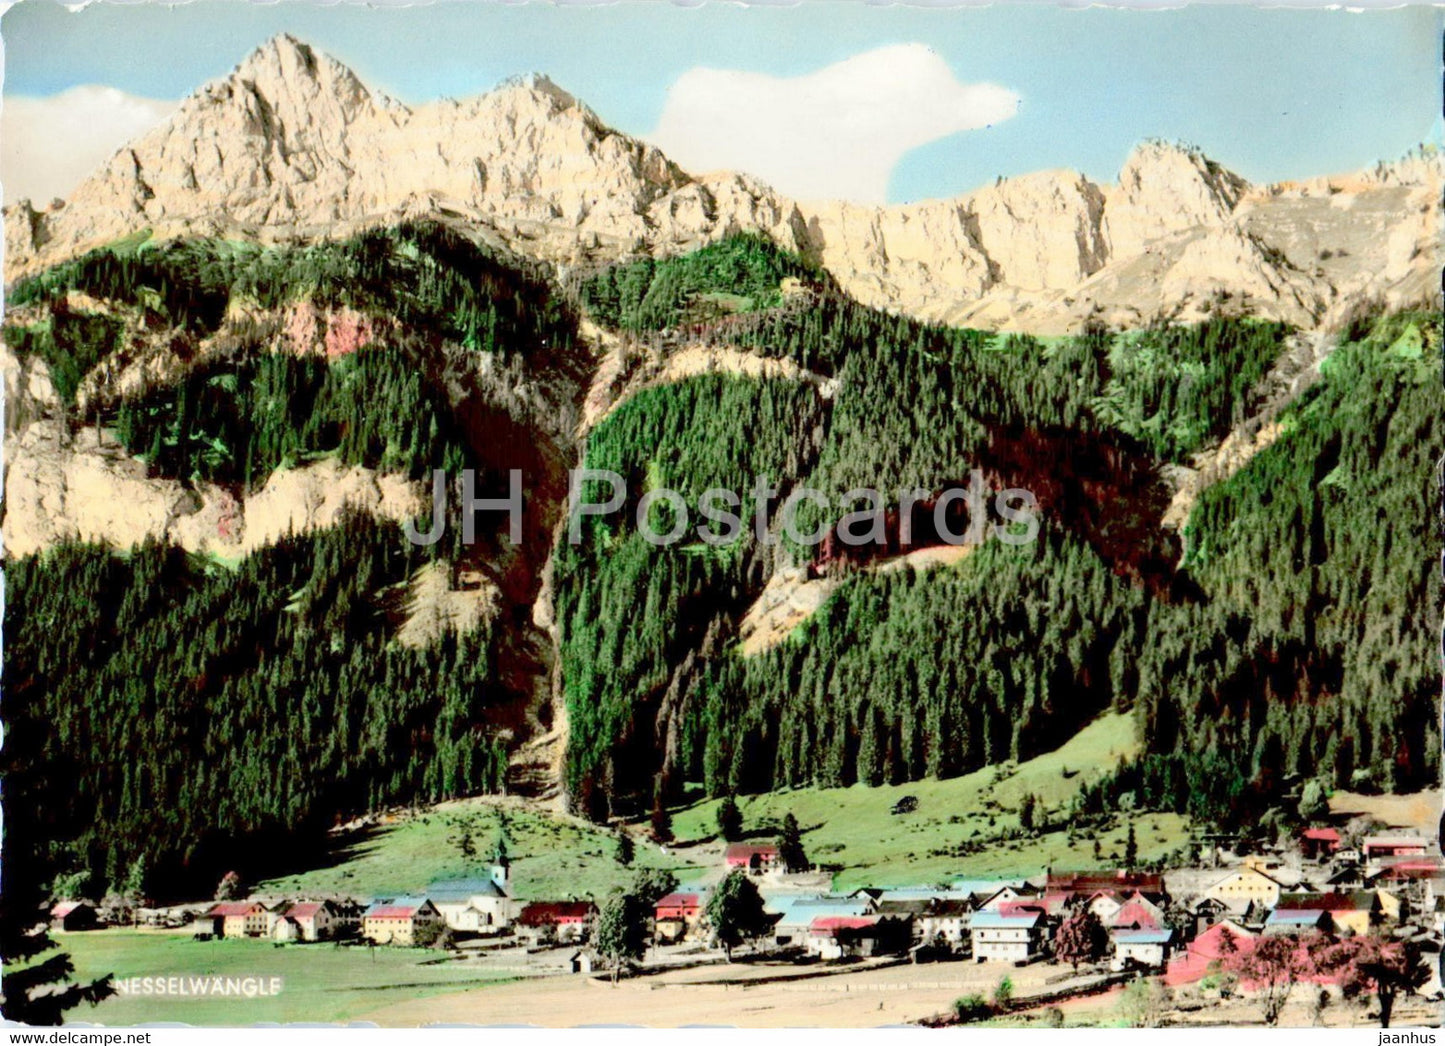 Nesselwangle - Tirol mit Rote Fluh - Gimpel - Nesselwangler Scharte - Austria - unused - JH Postcards